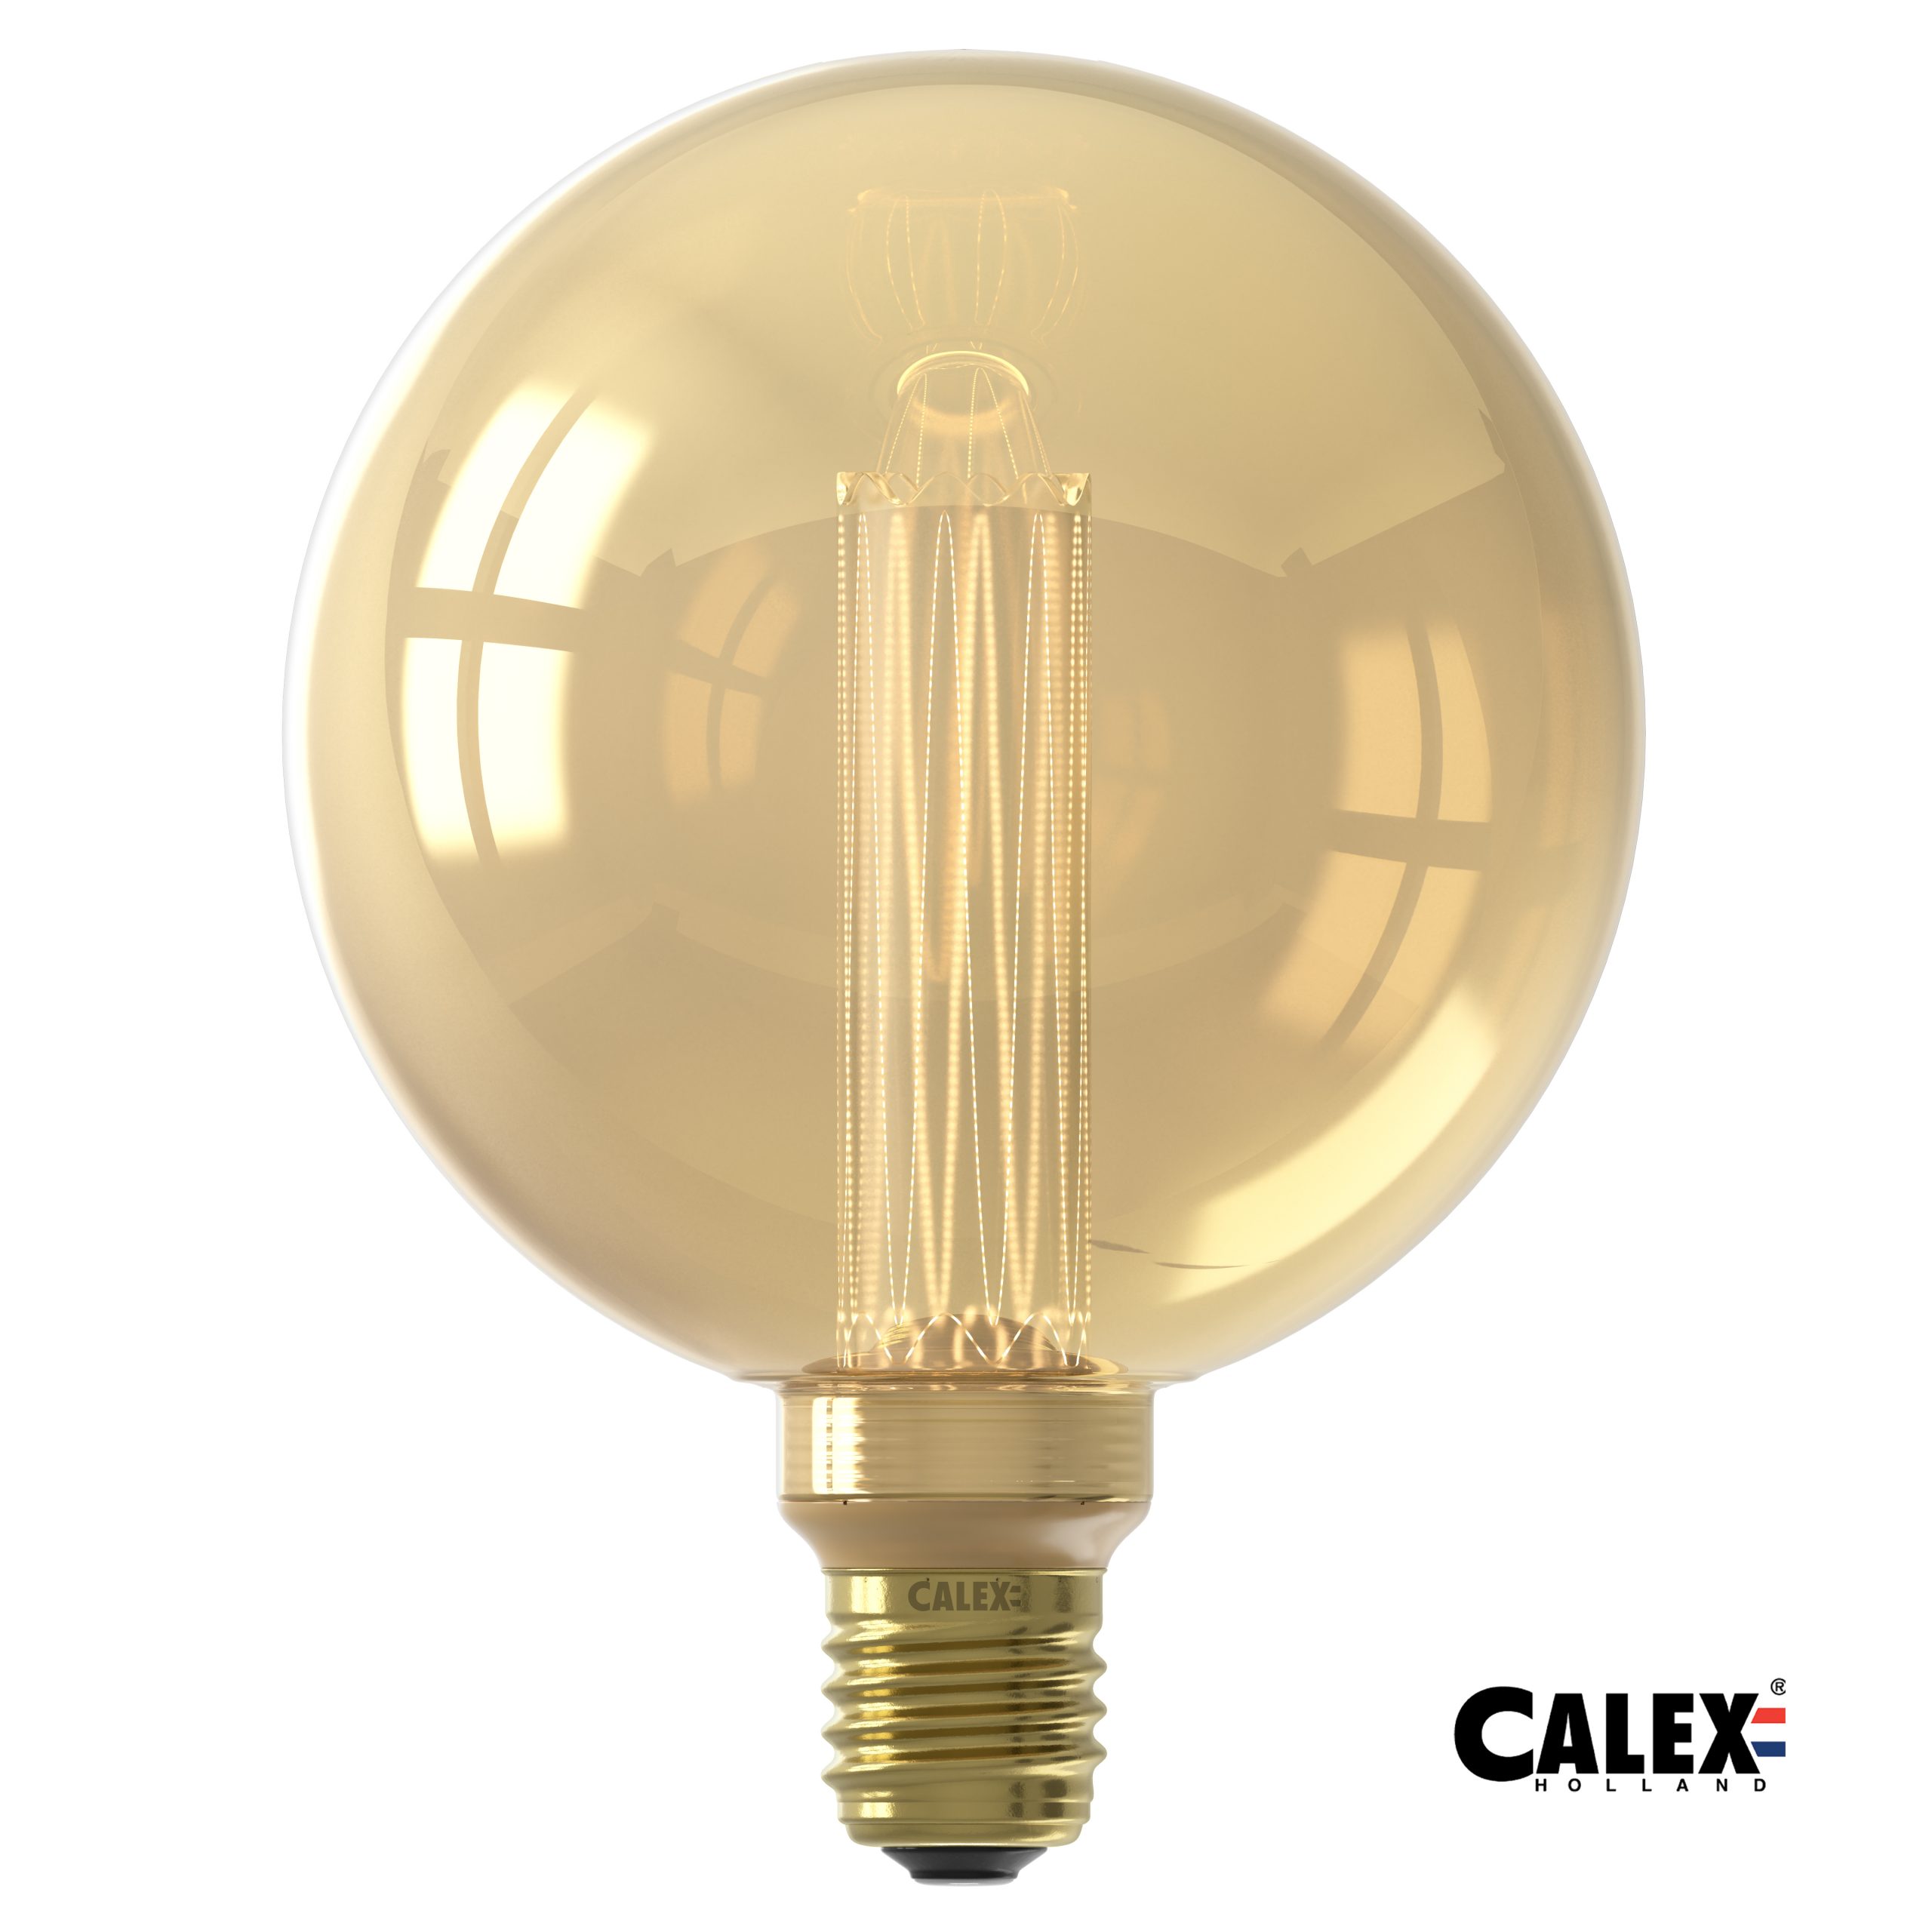 Calex 473879 LED Globe Crown Lamp, 3.5W, E27, Gold